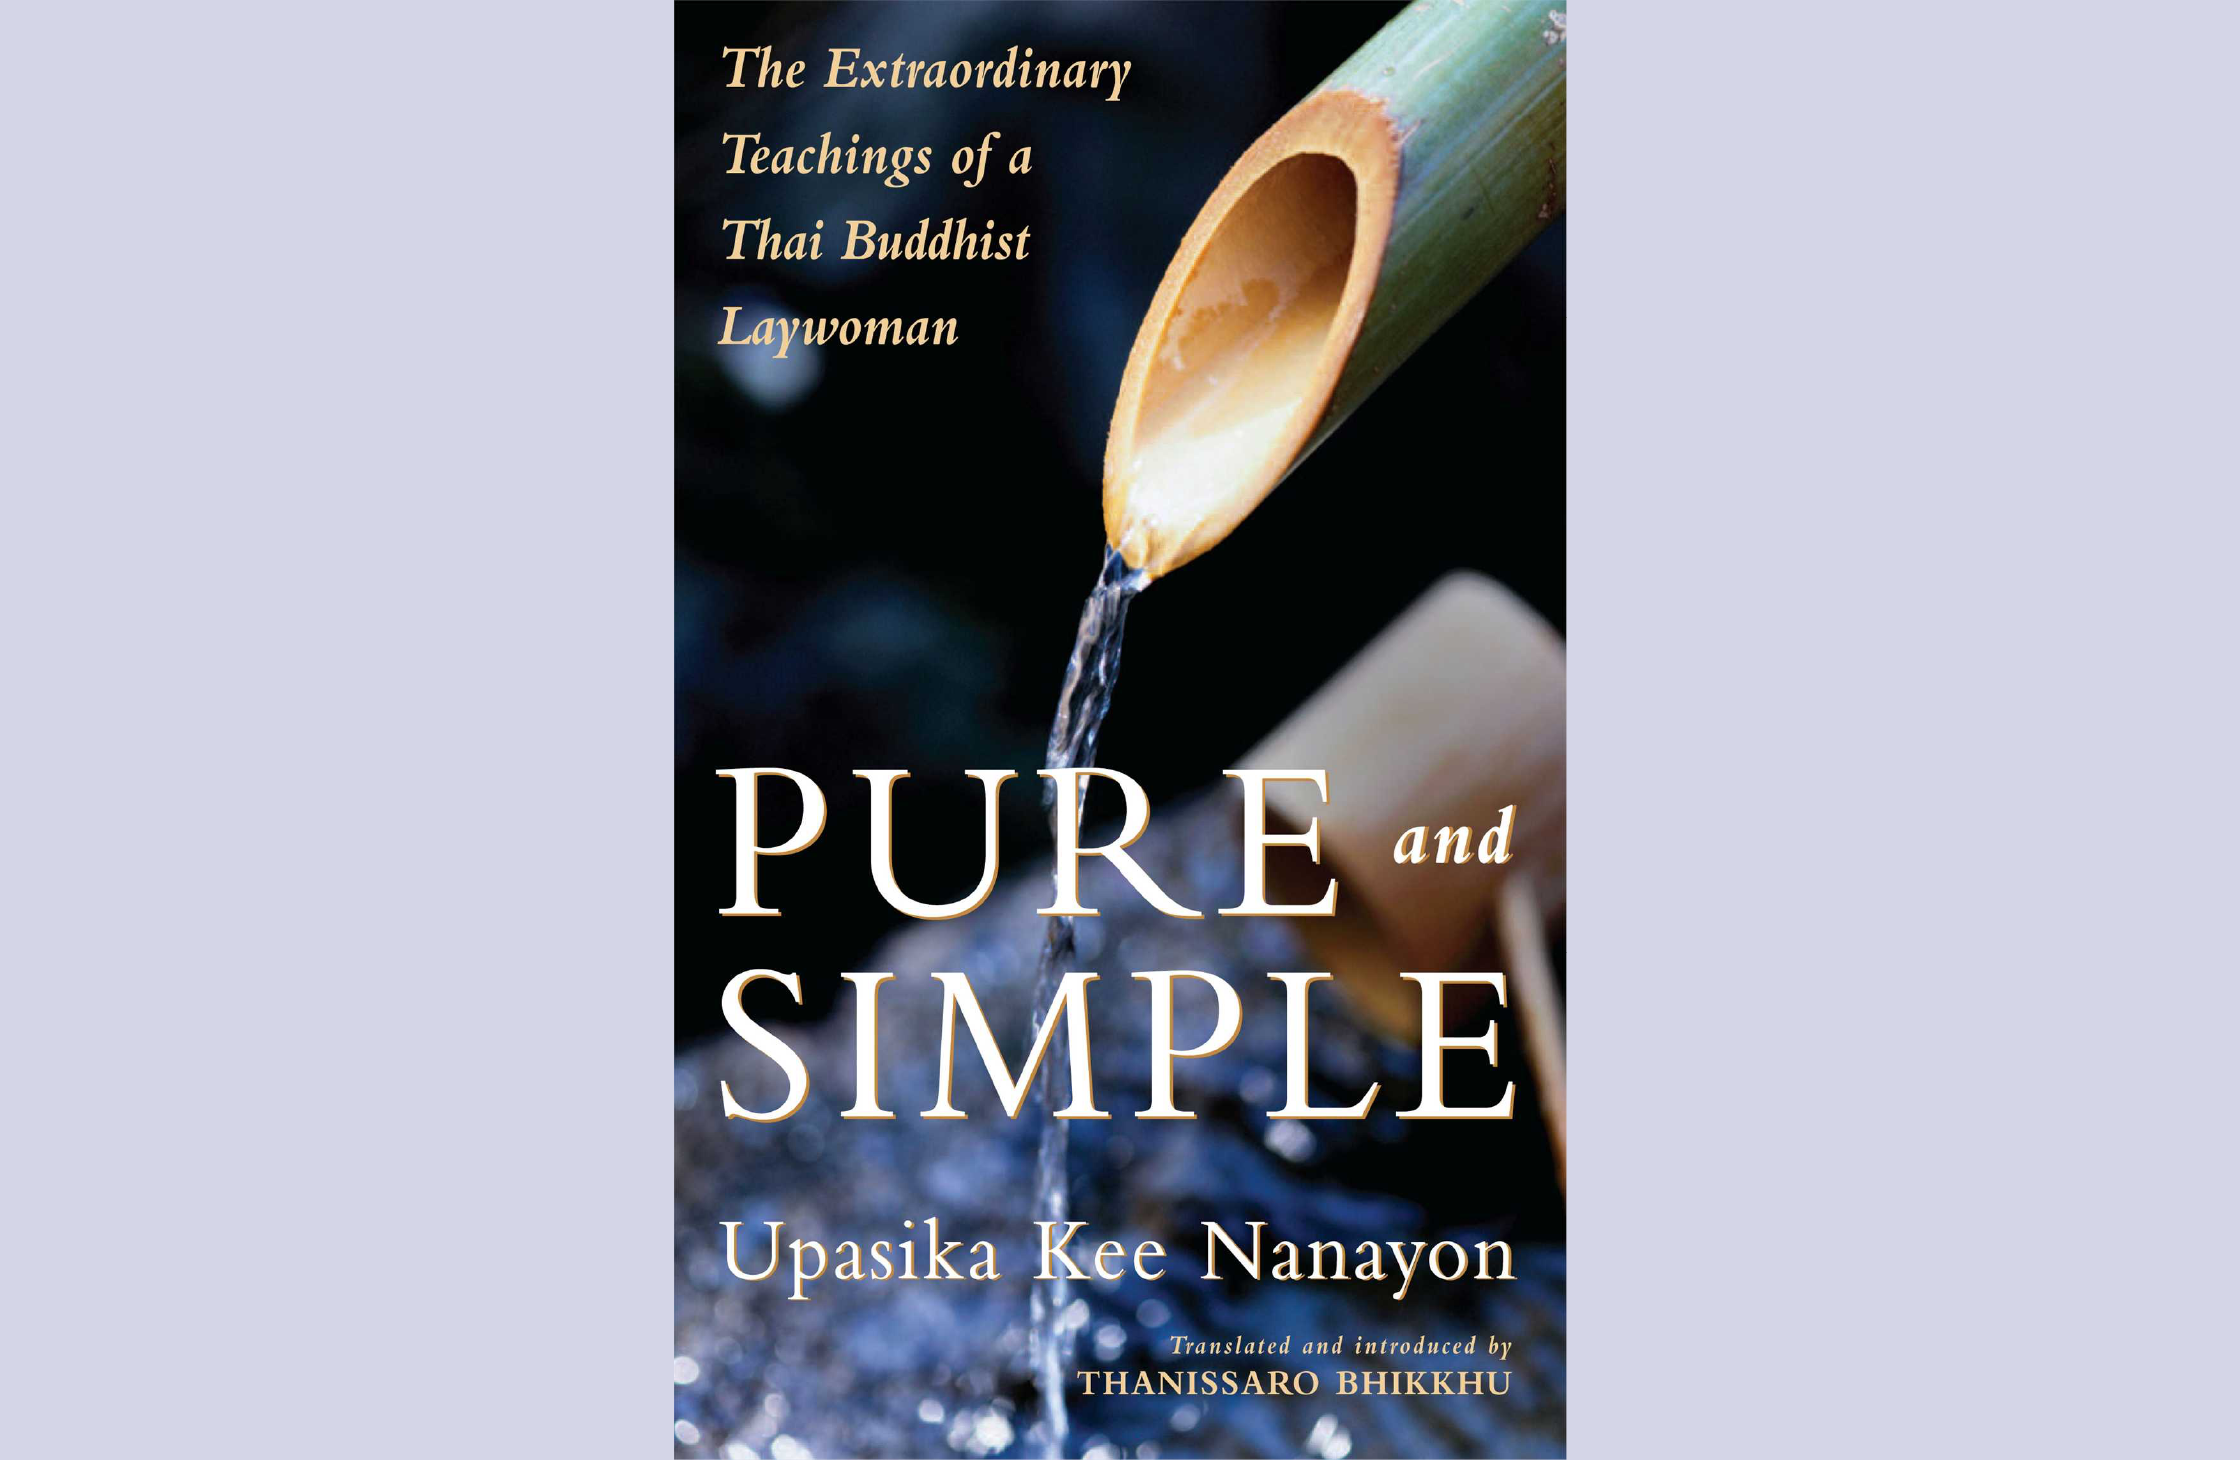 Summary: Pure and Simple by Upasika Kee Nanayon